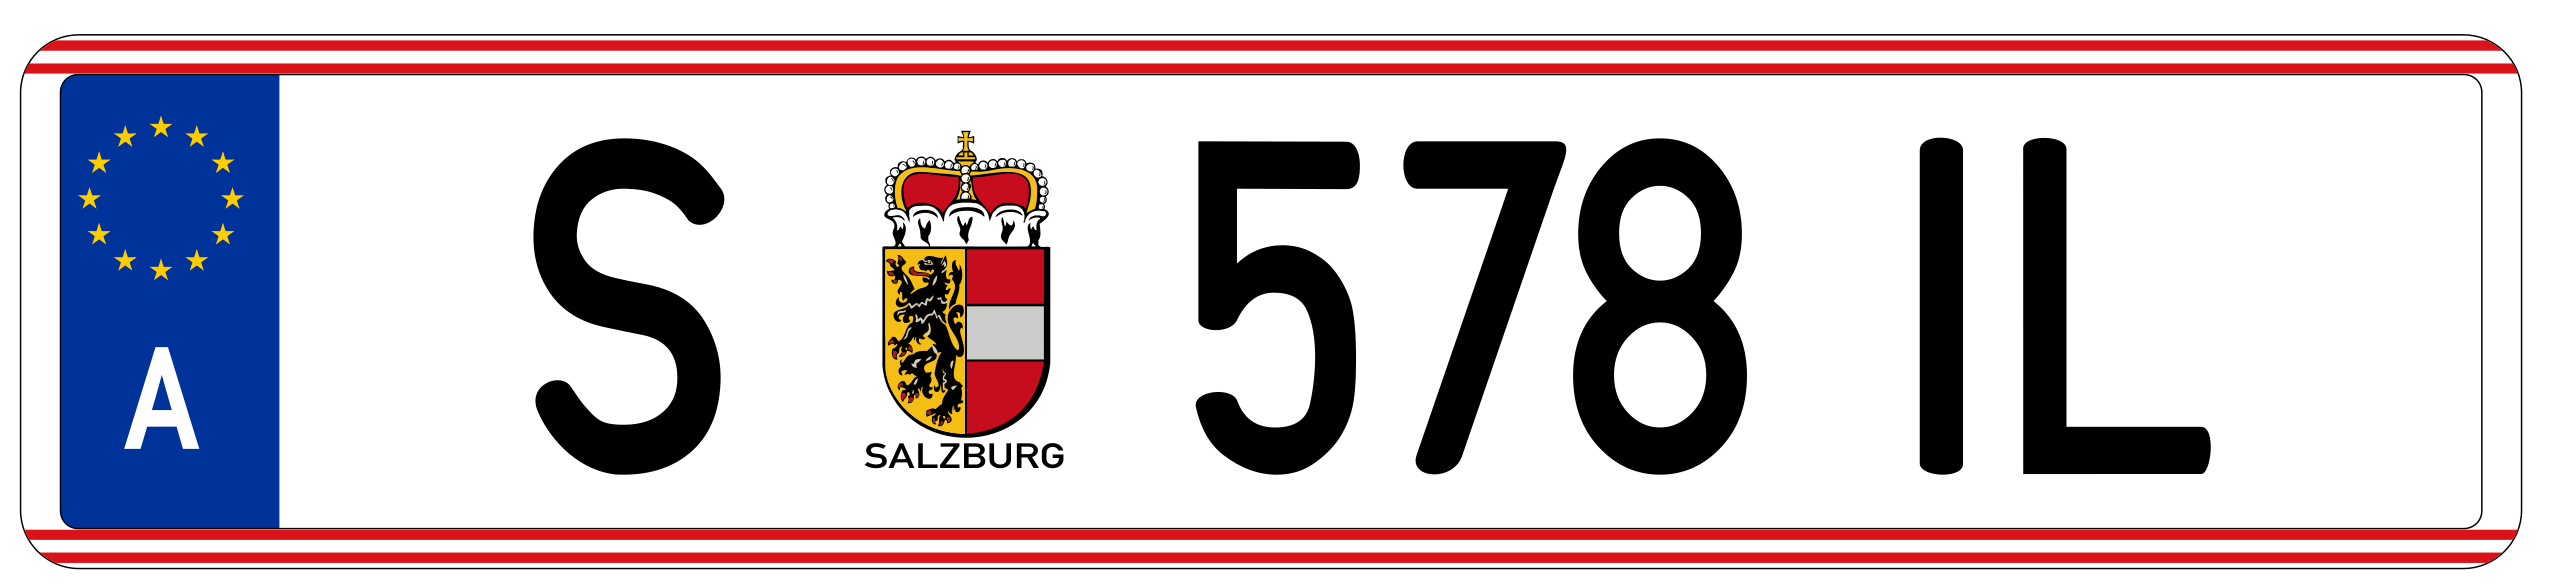 Datei:Austria diplomatic license plate WD-15.jpg – Wikipedia